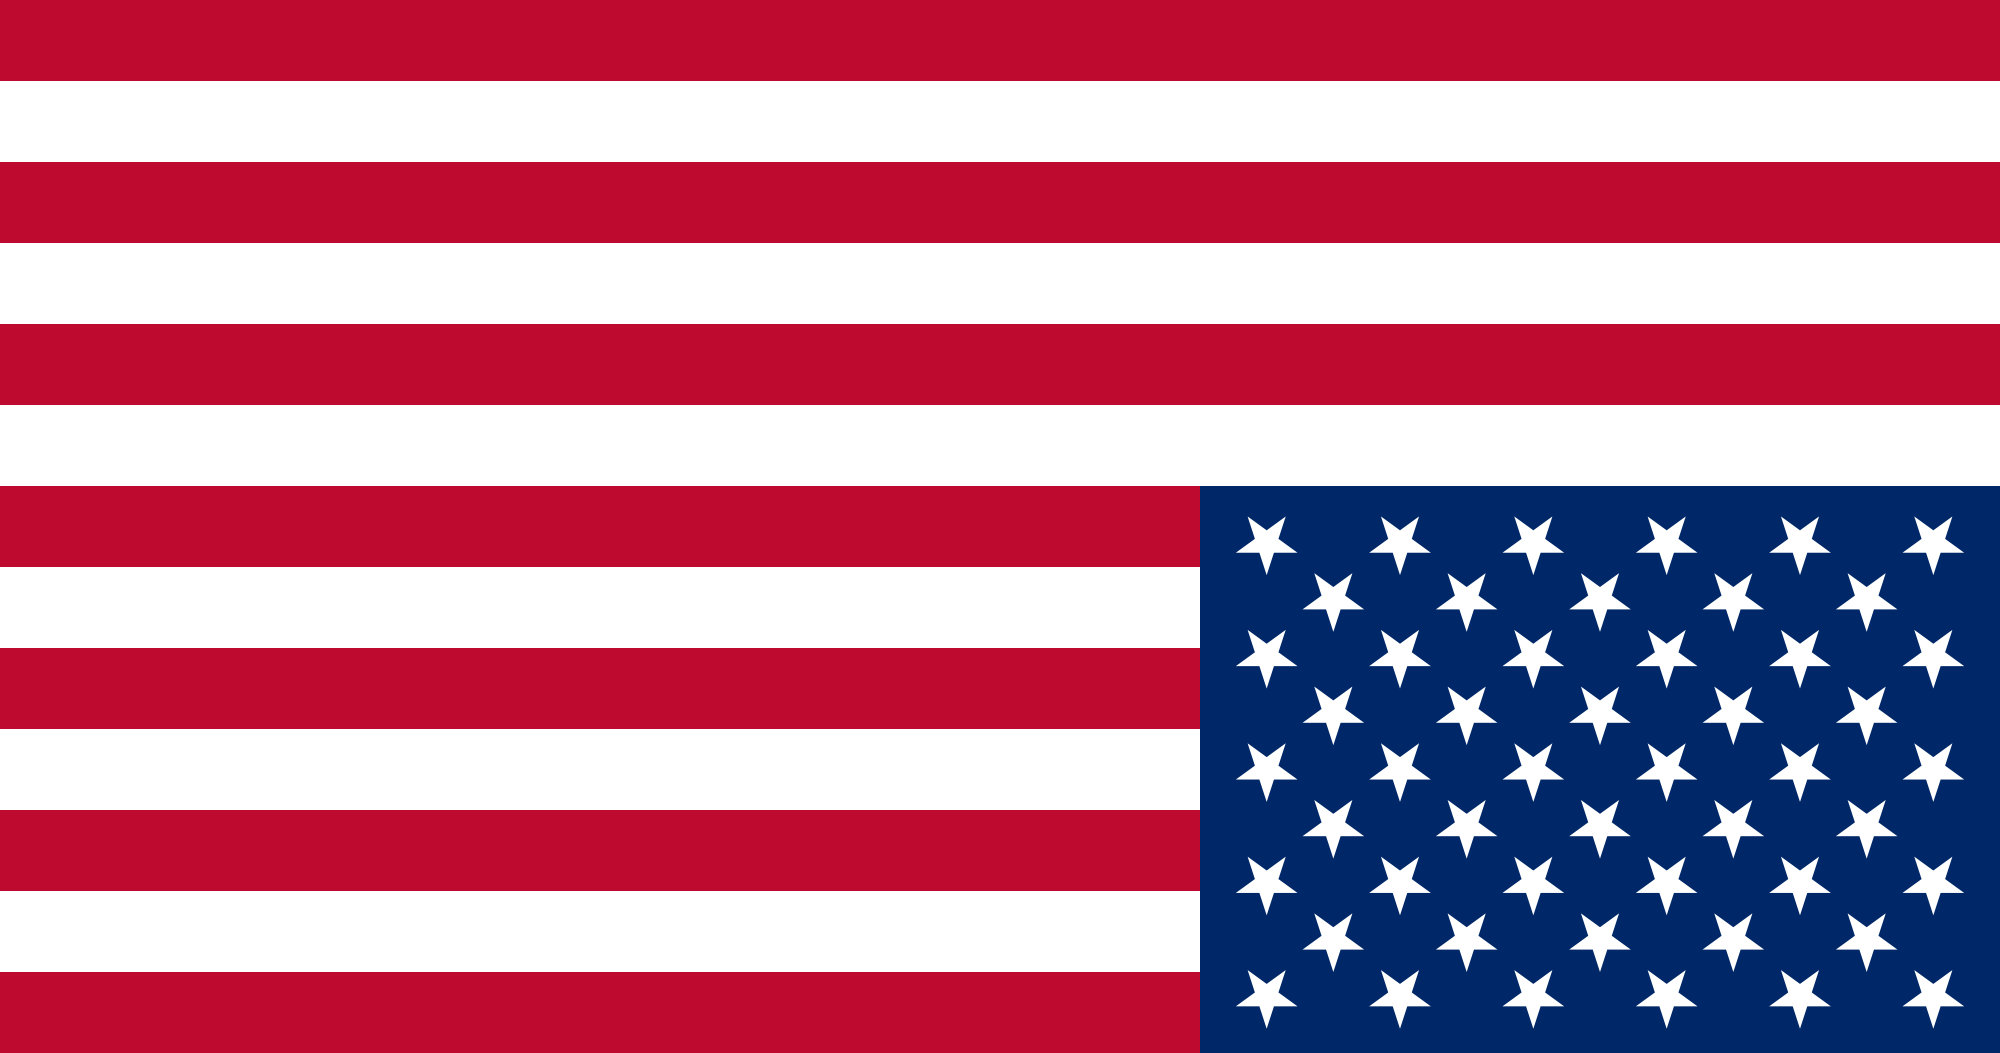 Флаг Соединённых Штатов Америки. 51 Штат США. Флаг США 1776. The United States of America флаг.